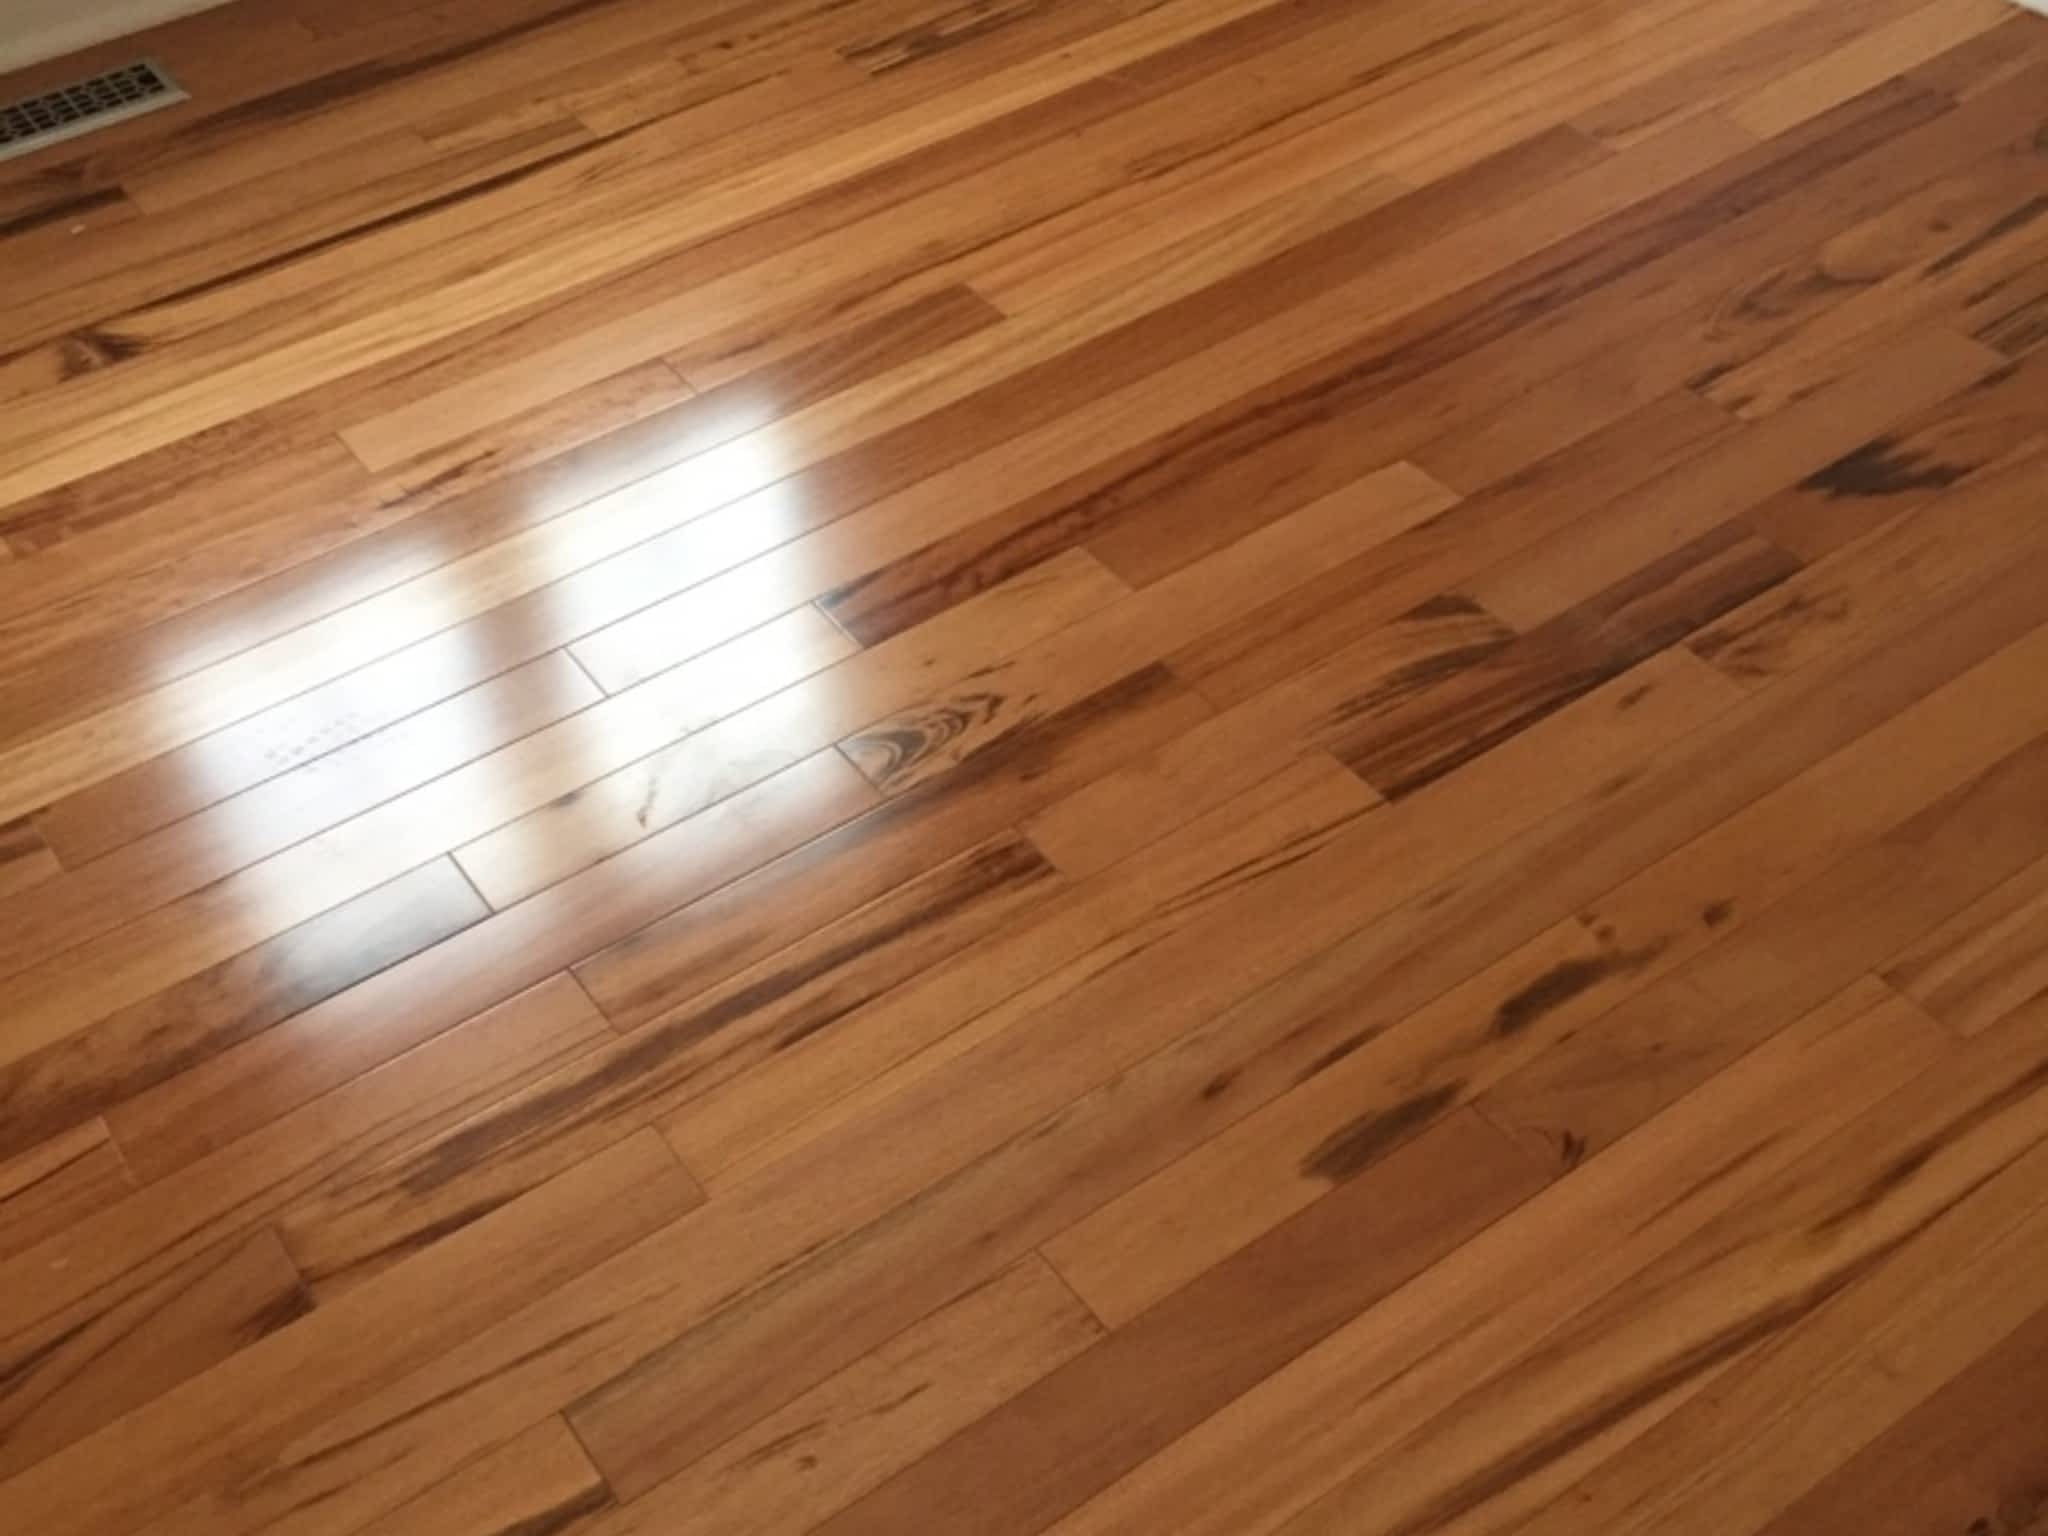 photo Total Hardwood Flooring